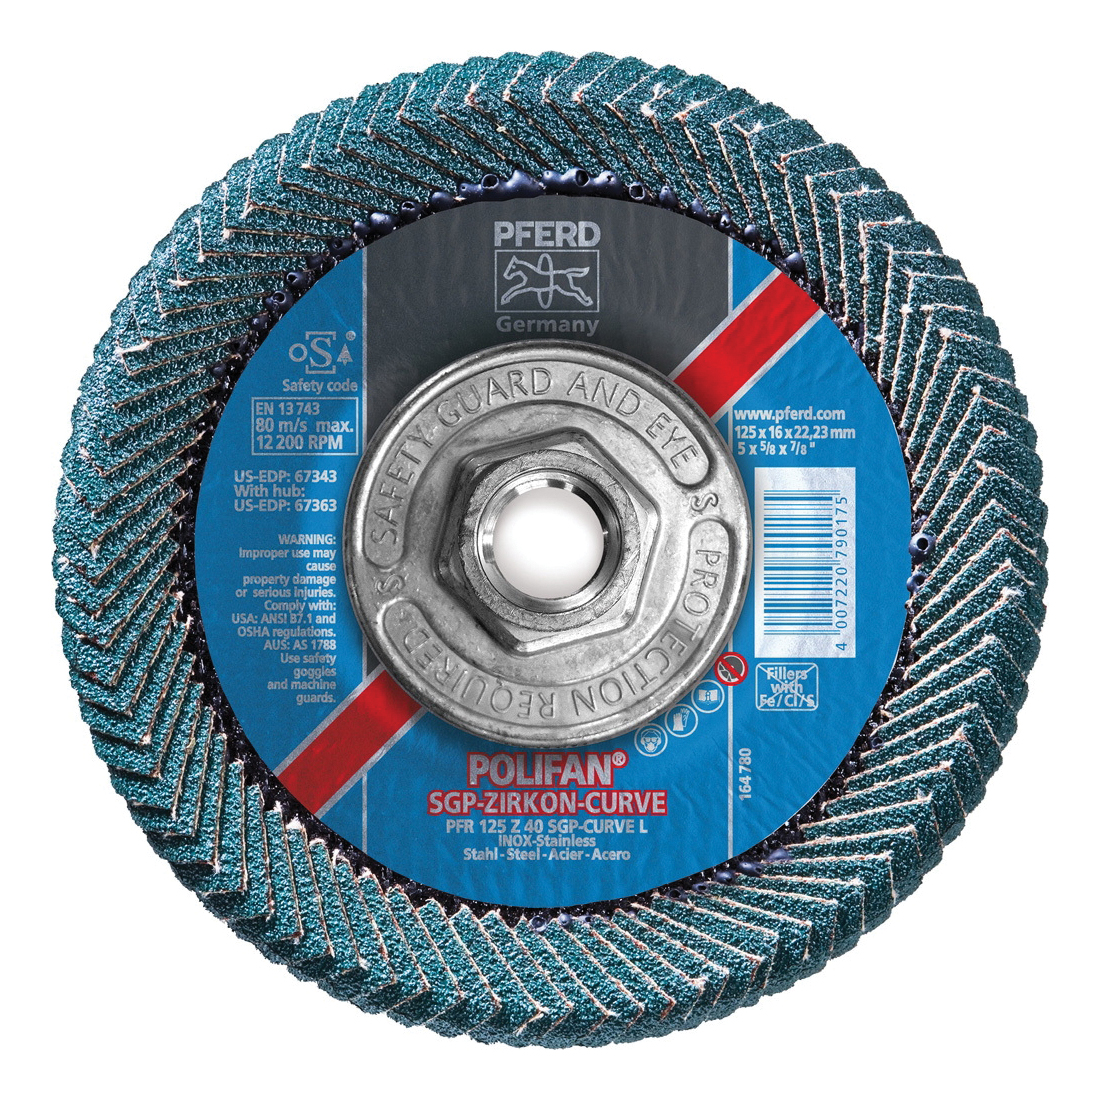 PFERD Polifan® 67363 Special Line SGP Z-CURVE Threaded Coated Abrasive Flap Disc, 5 in Dia, 40 Grit, Zirconia Alumina Abrasive, Type PFR/Radial Disc